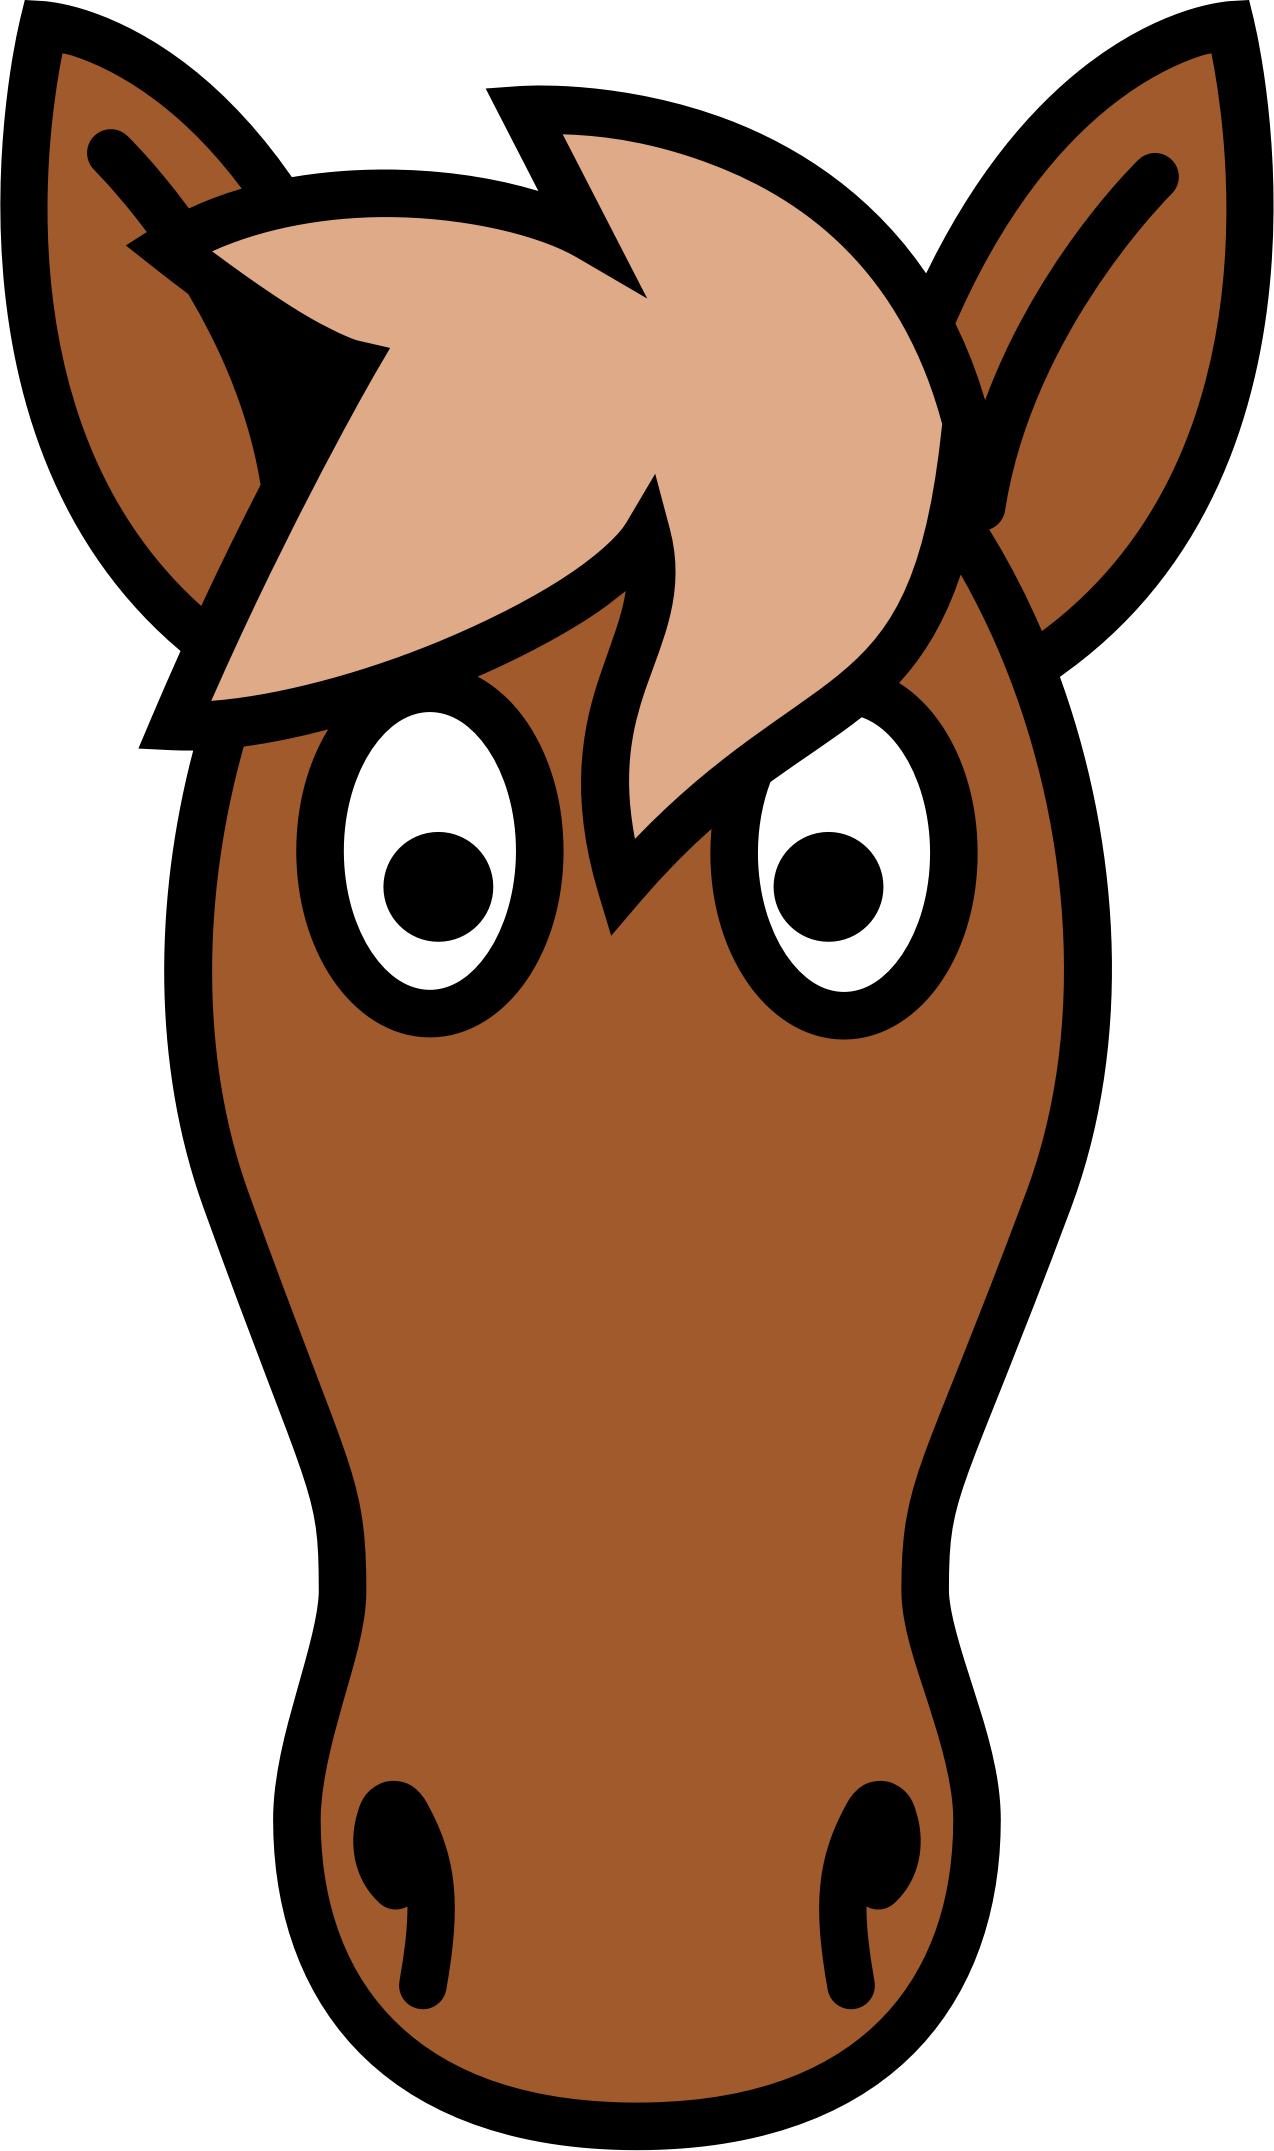 Big Image - Horse Head Mask (1274x2151)